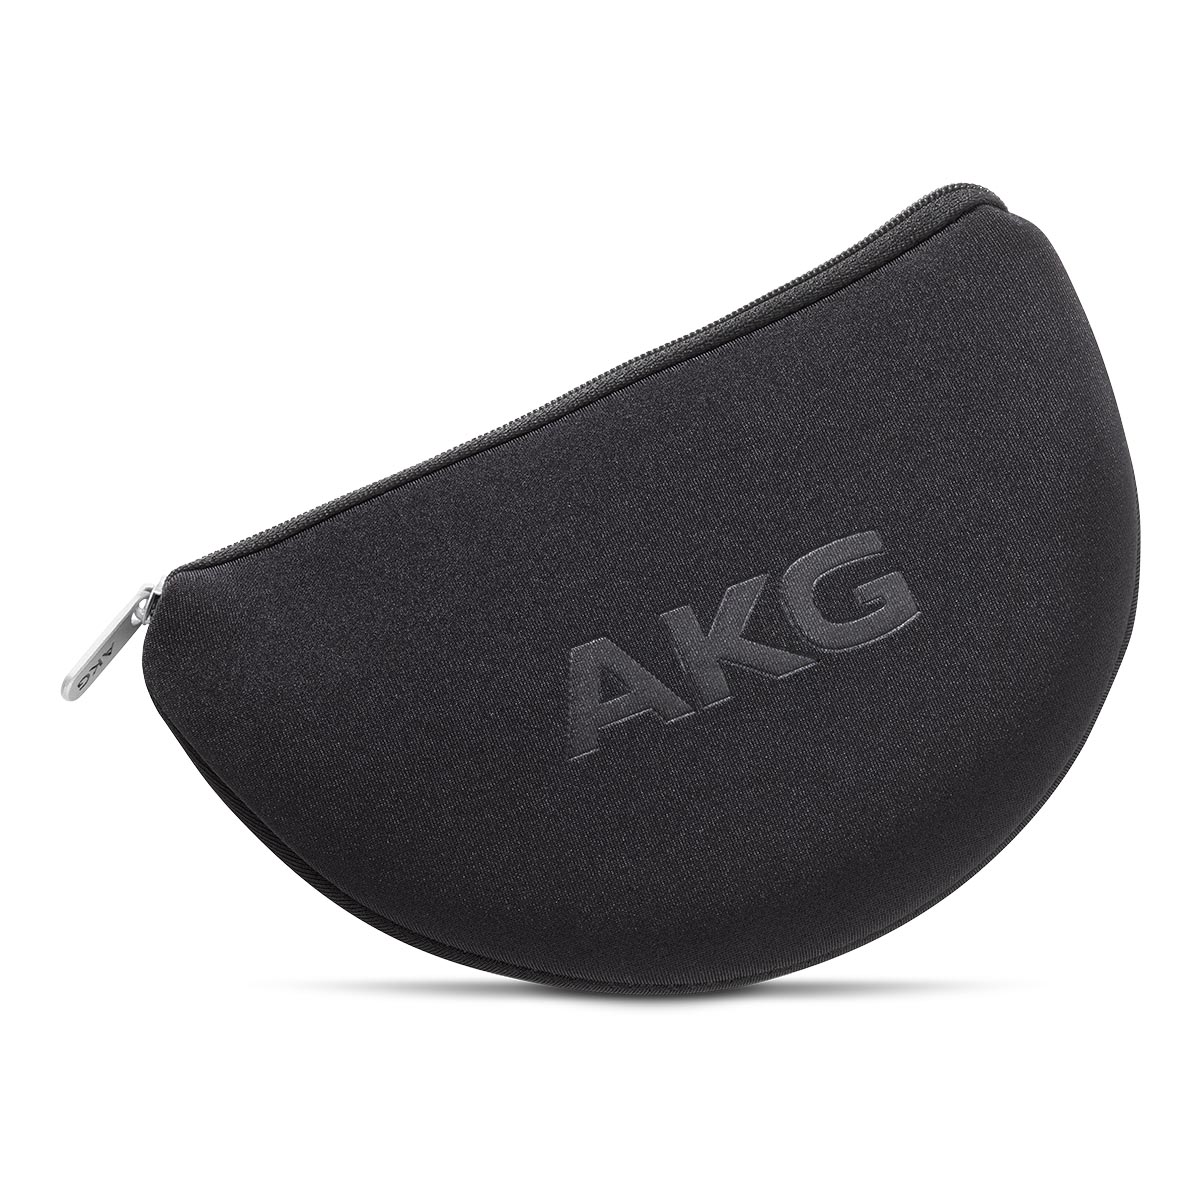 AKG N60 NC - Transporttasche